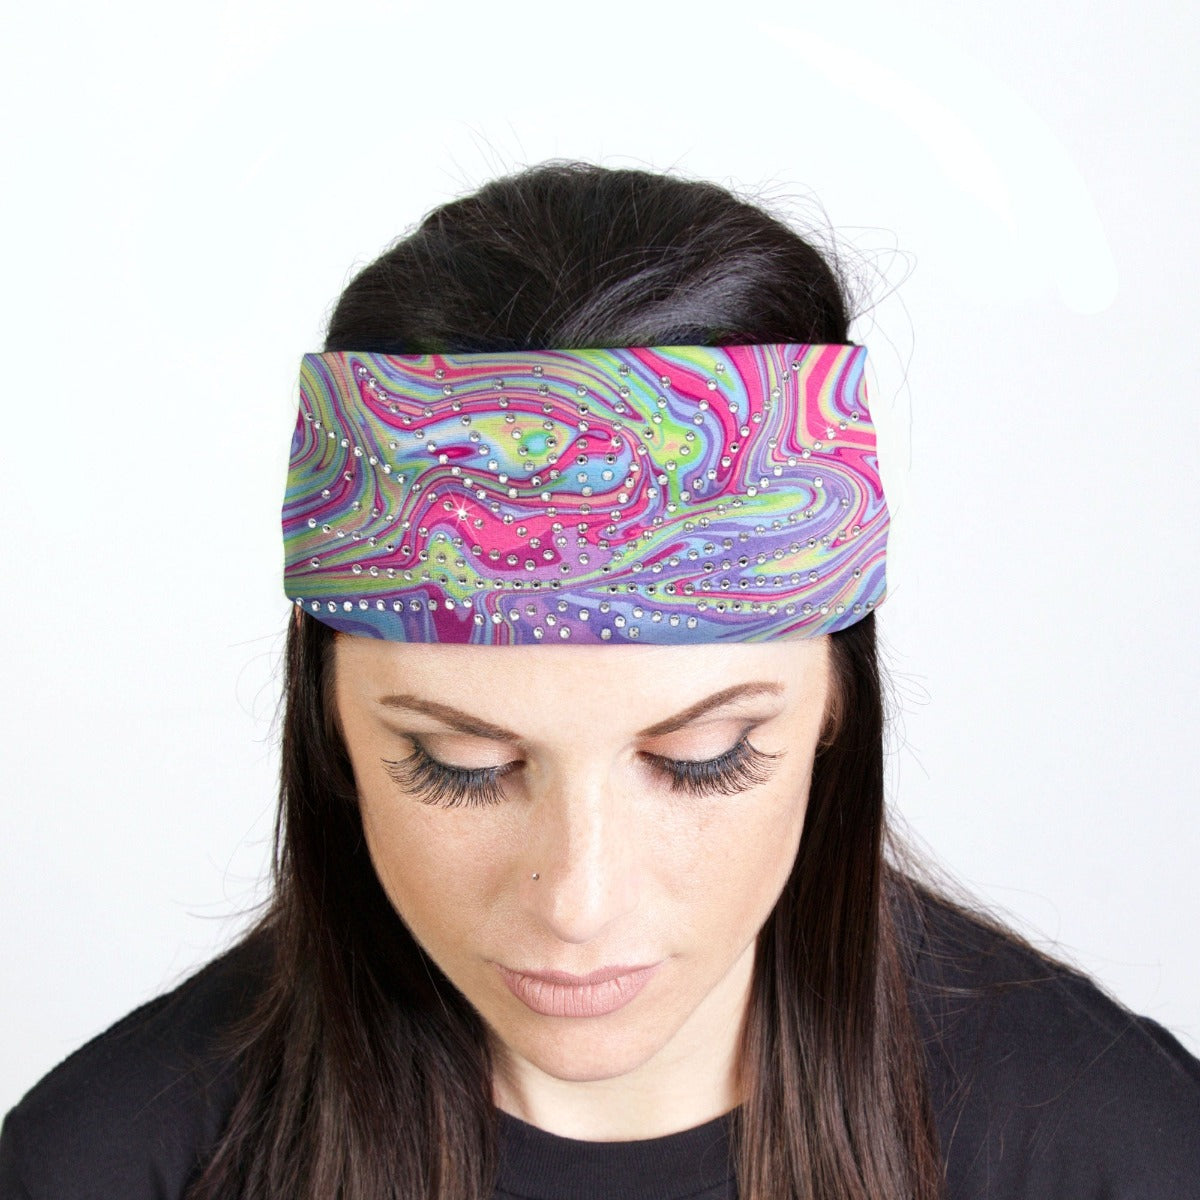 A woman wearing a Hot Leathers Rainbow Swirl Bandana Headband Wraps w/Rhinestones, adding a touch of sparkle to her biker style ensemble.